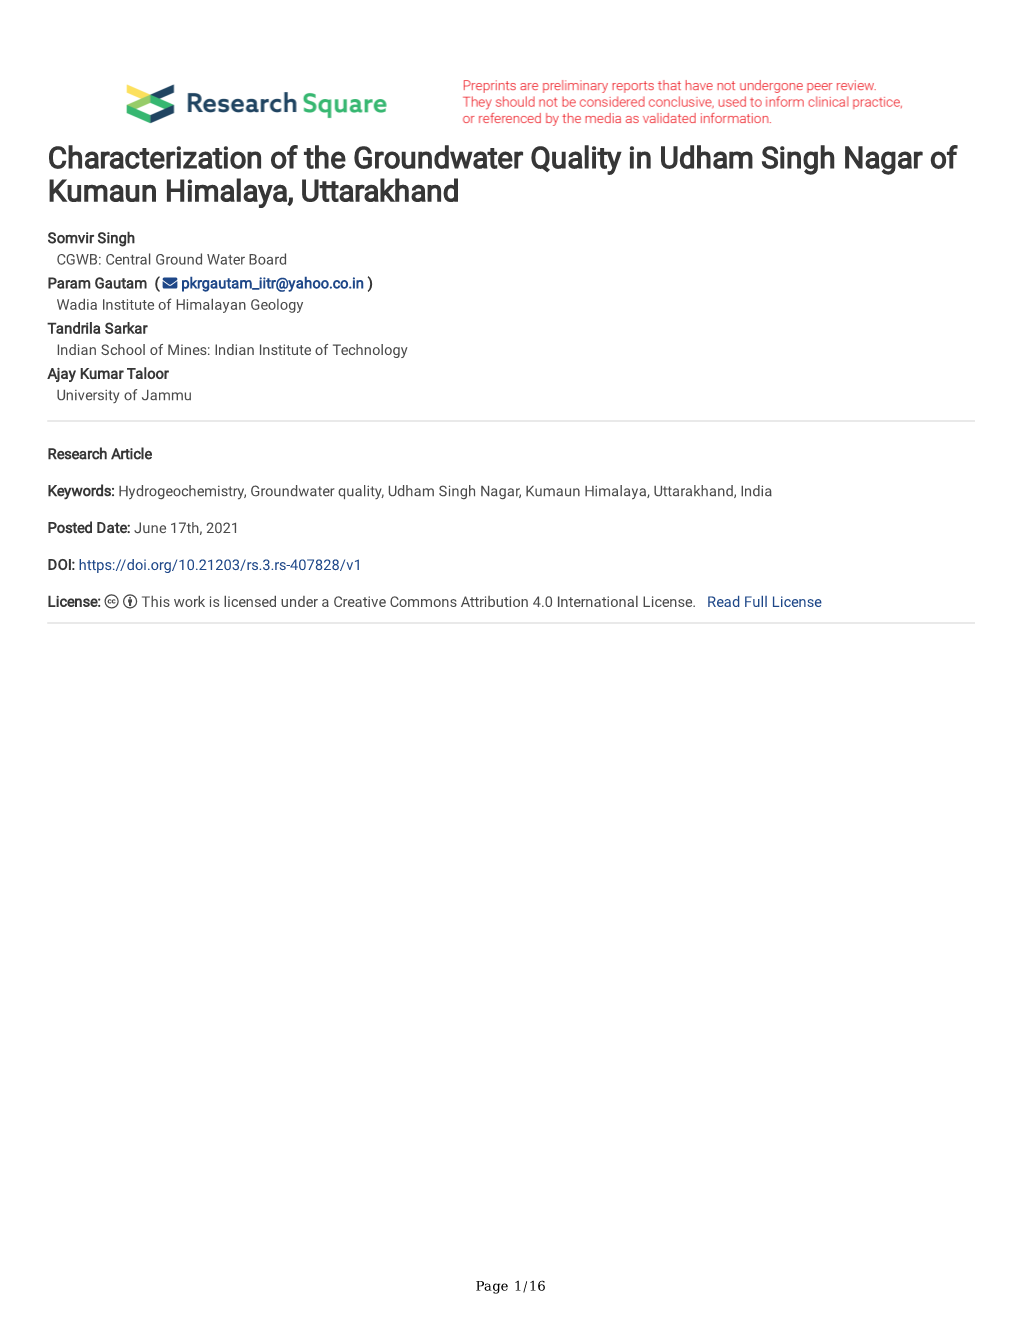 Characterization of the Groundwater Quality in Udham Singh Nagar of Kumaun Himalaya, Uttarakhand